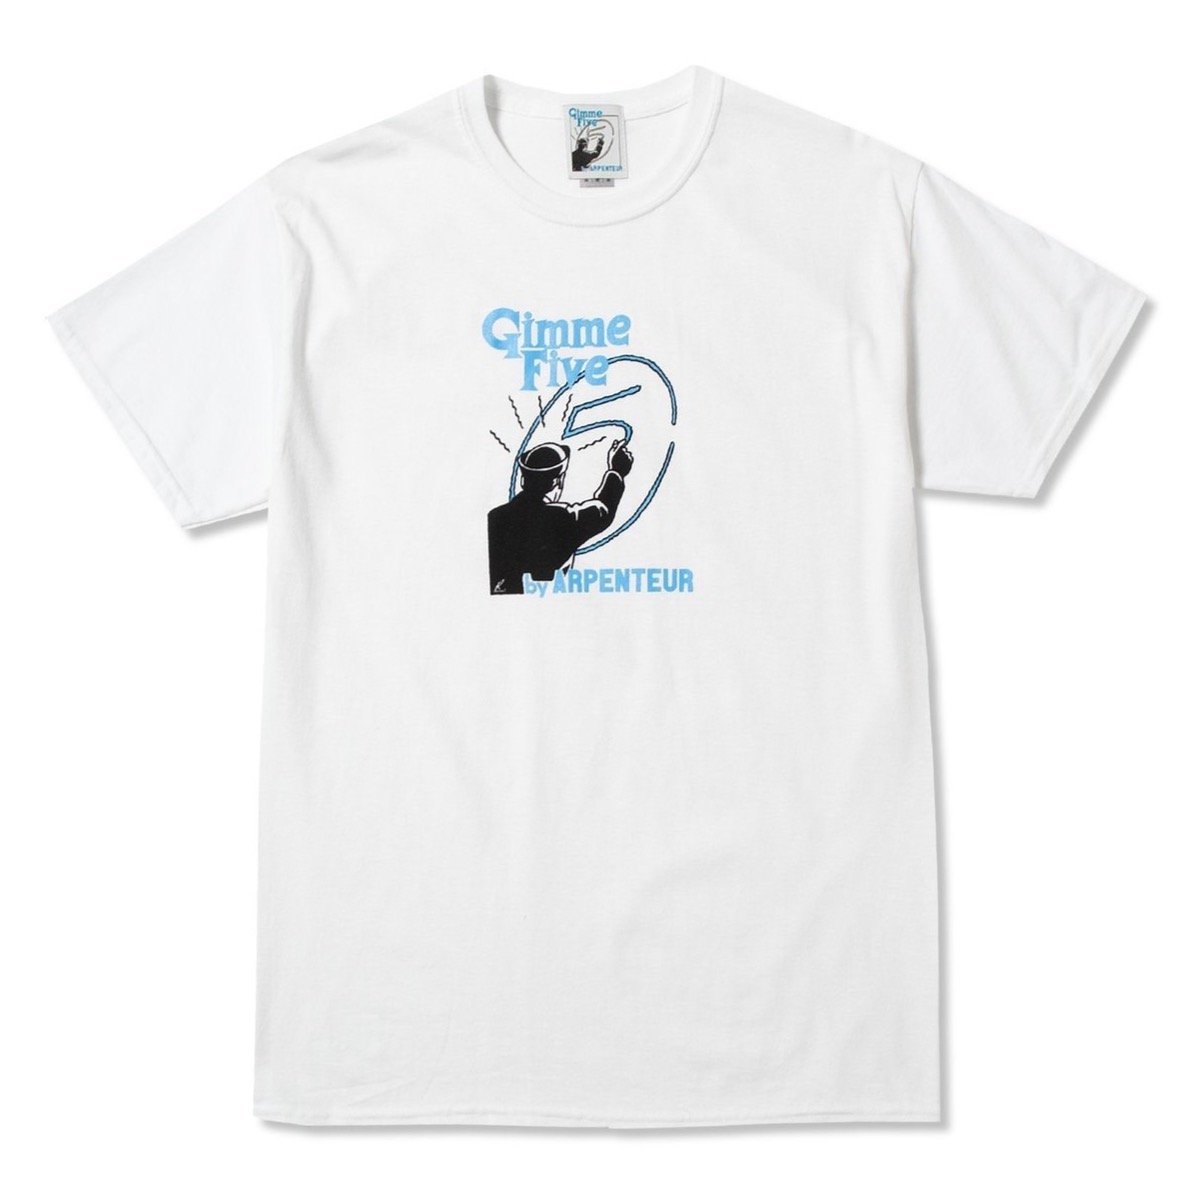 Gimme Five by Arpenteur Chalk Action T-Shirt